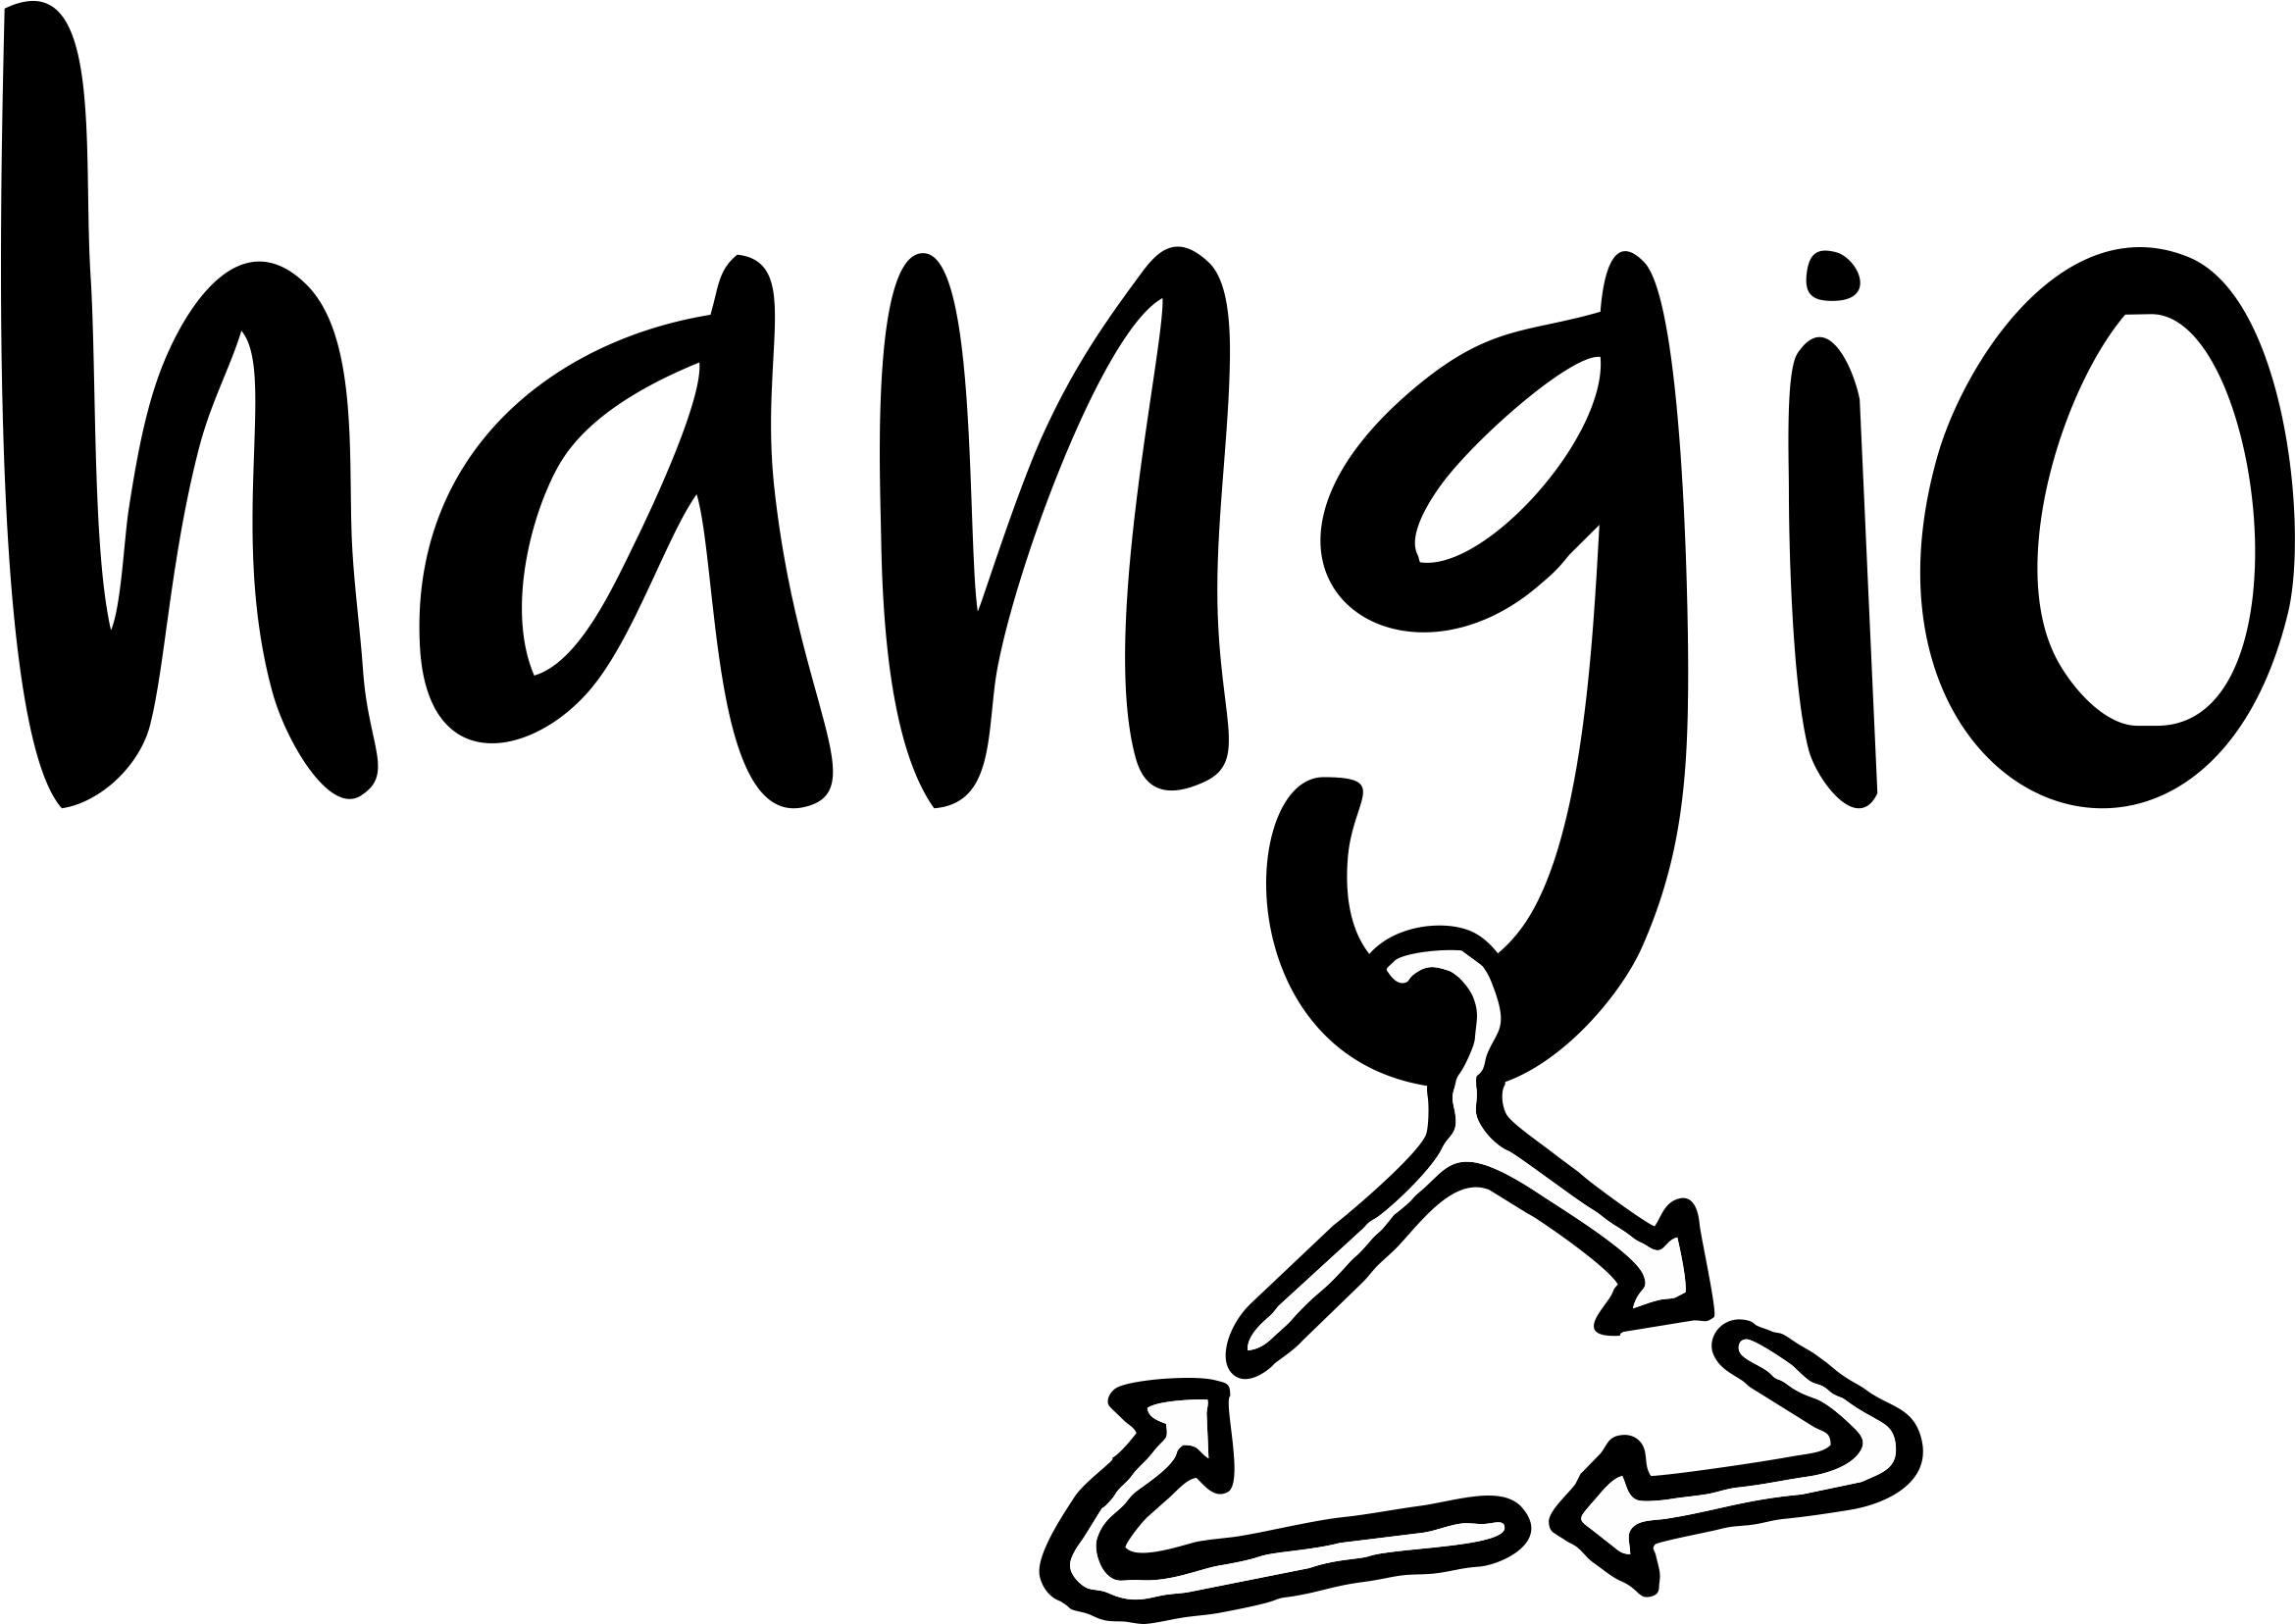 Hangio logo